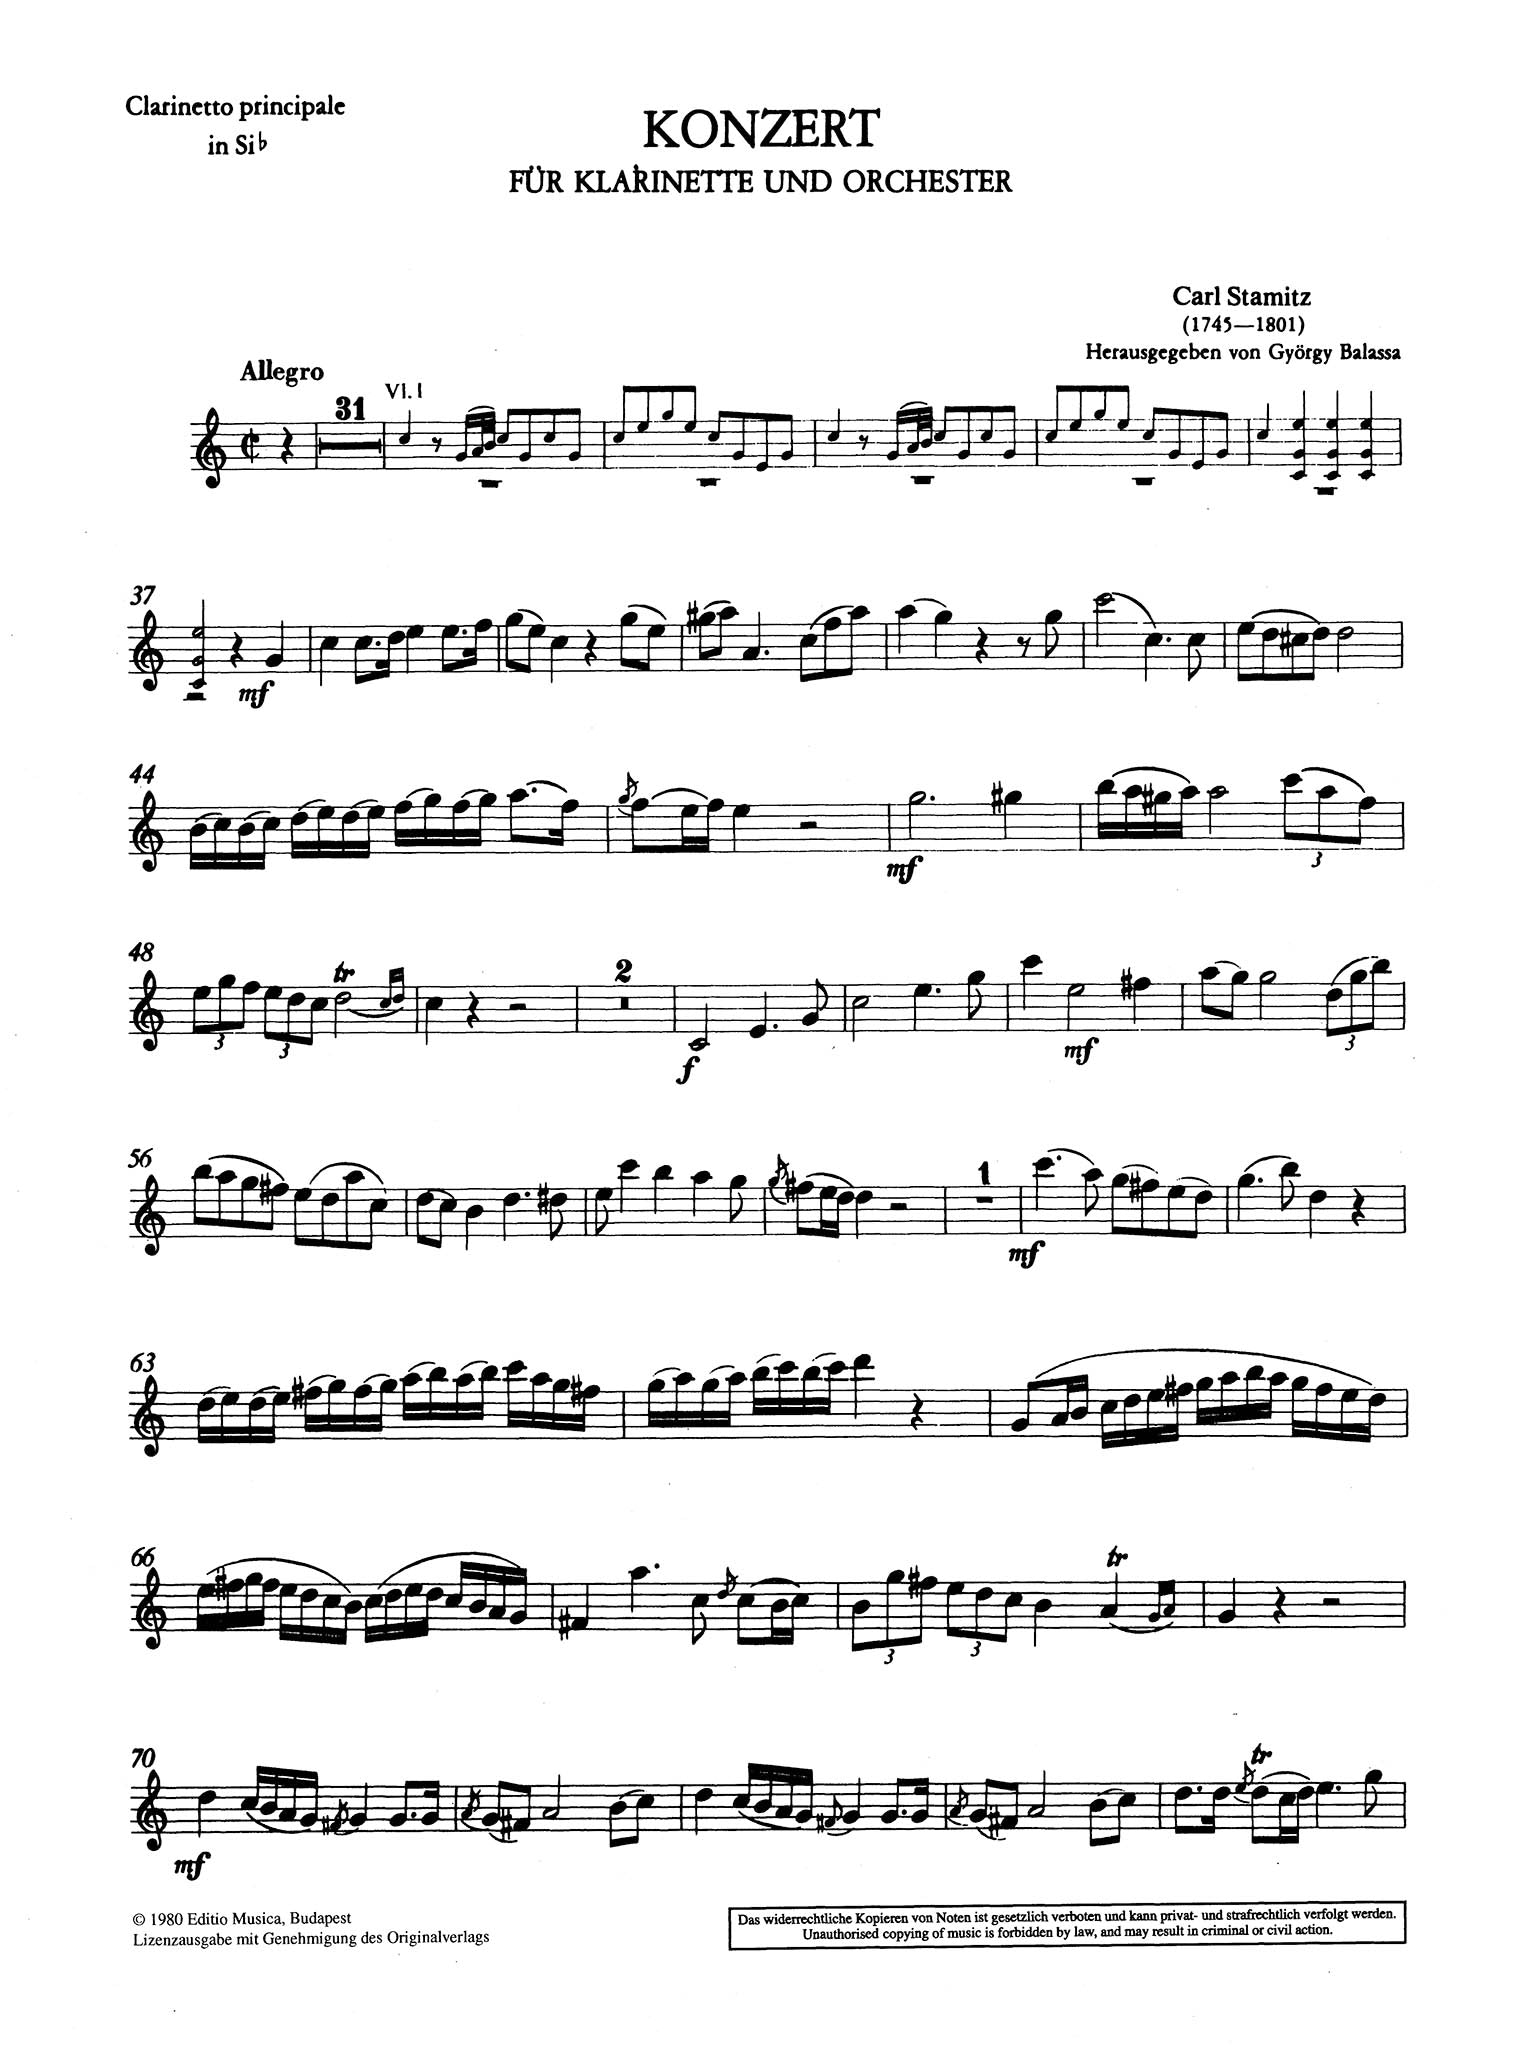 Clarinet Concerto No. 9 (Kaiser) in B-flat Major Clarinet part